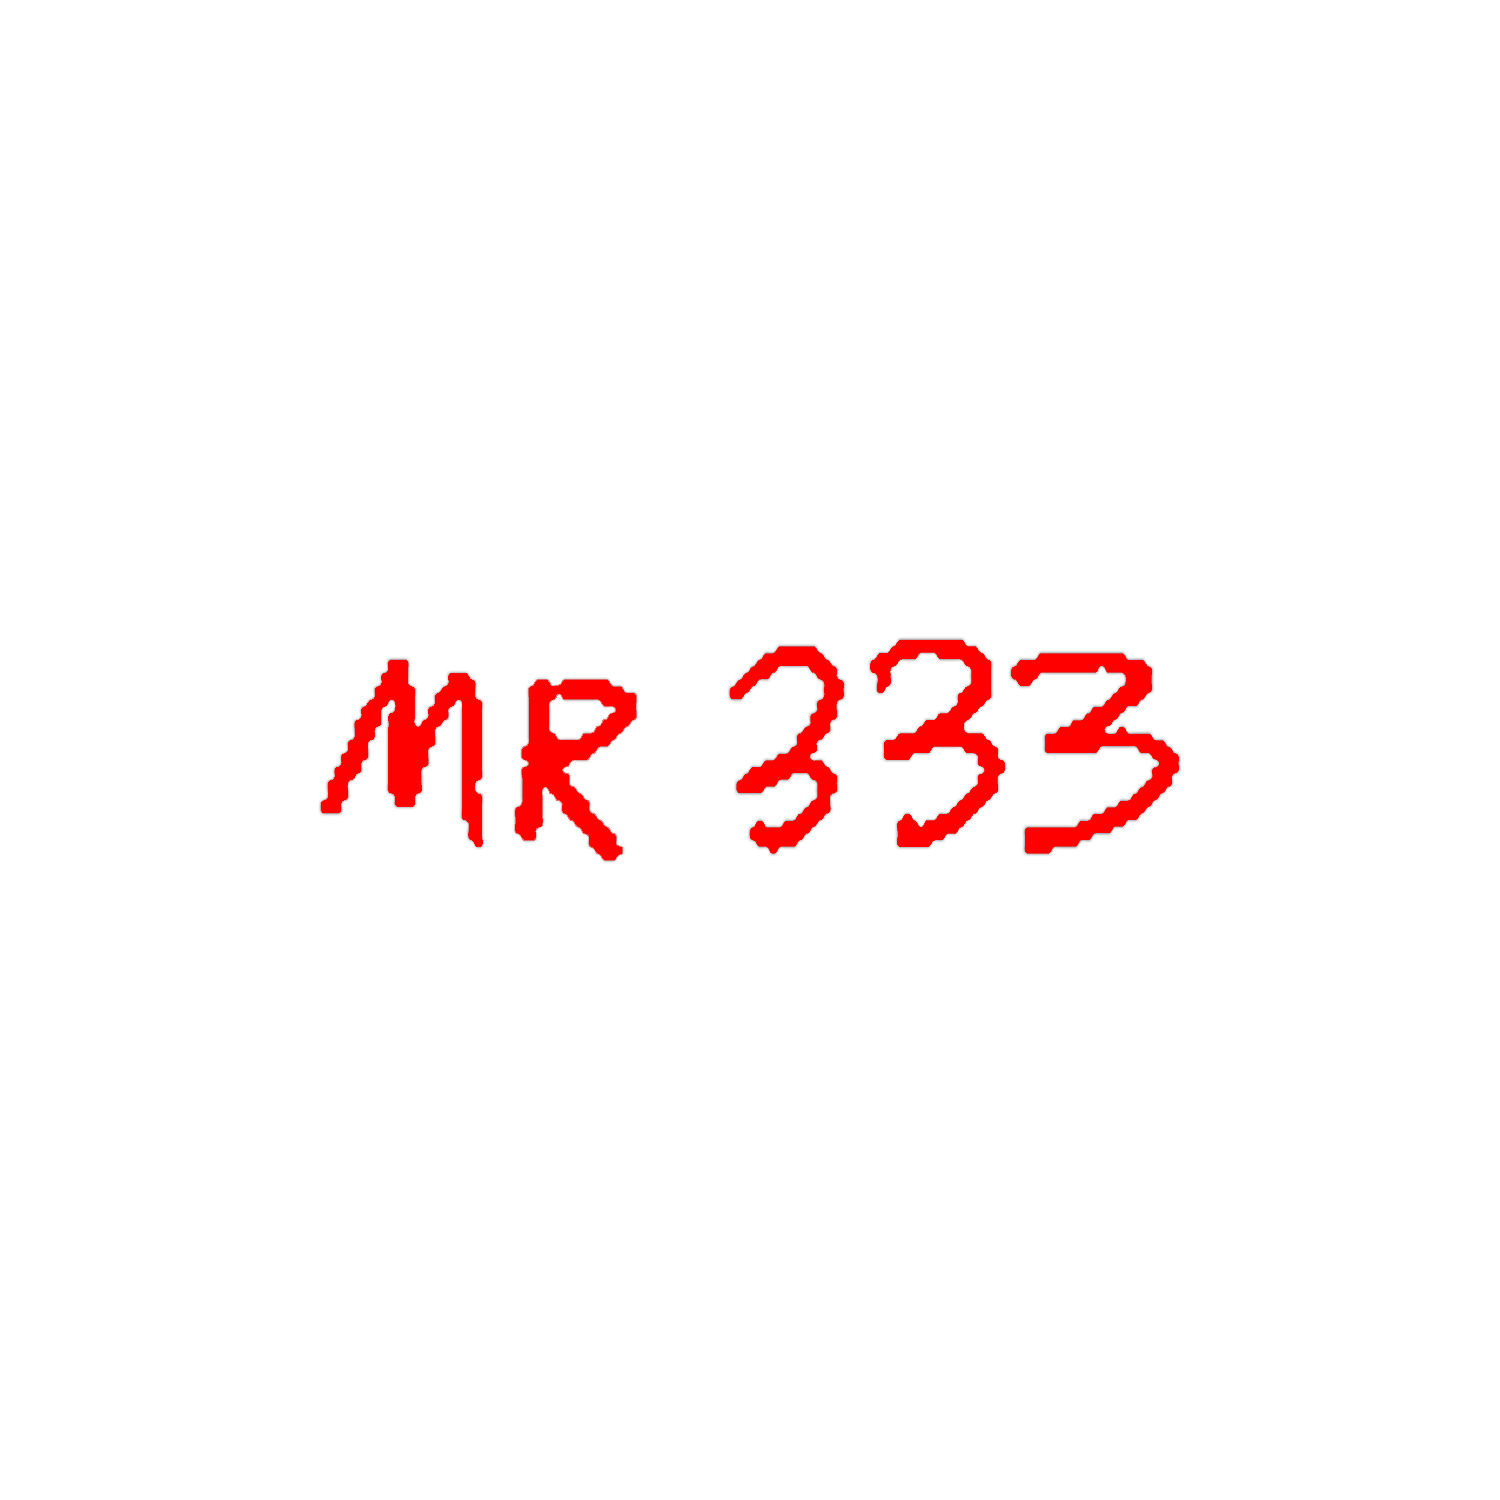 Mr 333